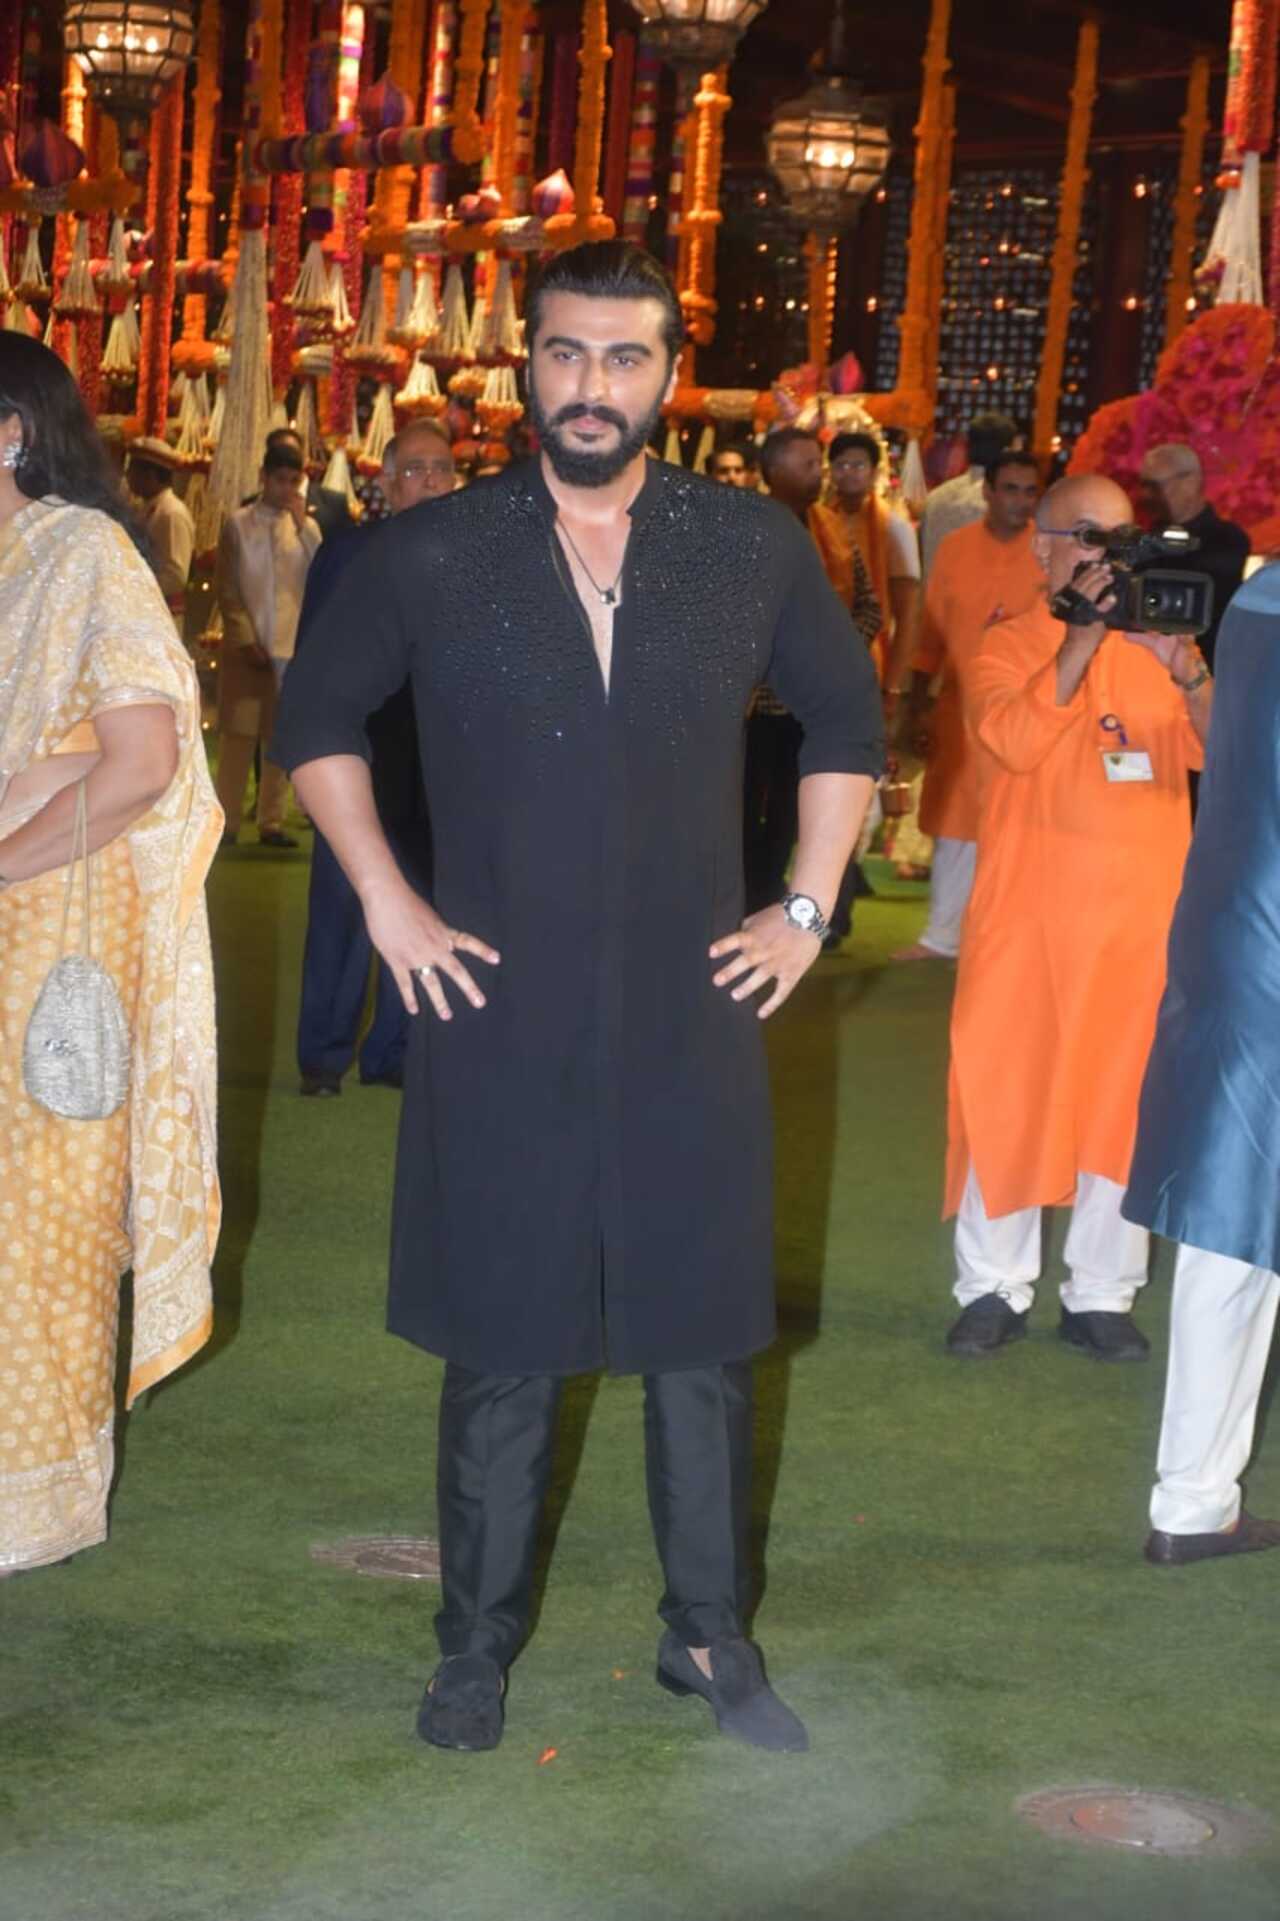 Arjun Kapoor was at the puja last evening. He wore a simple black kurta